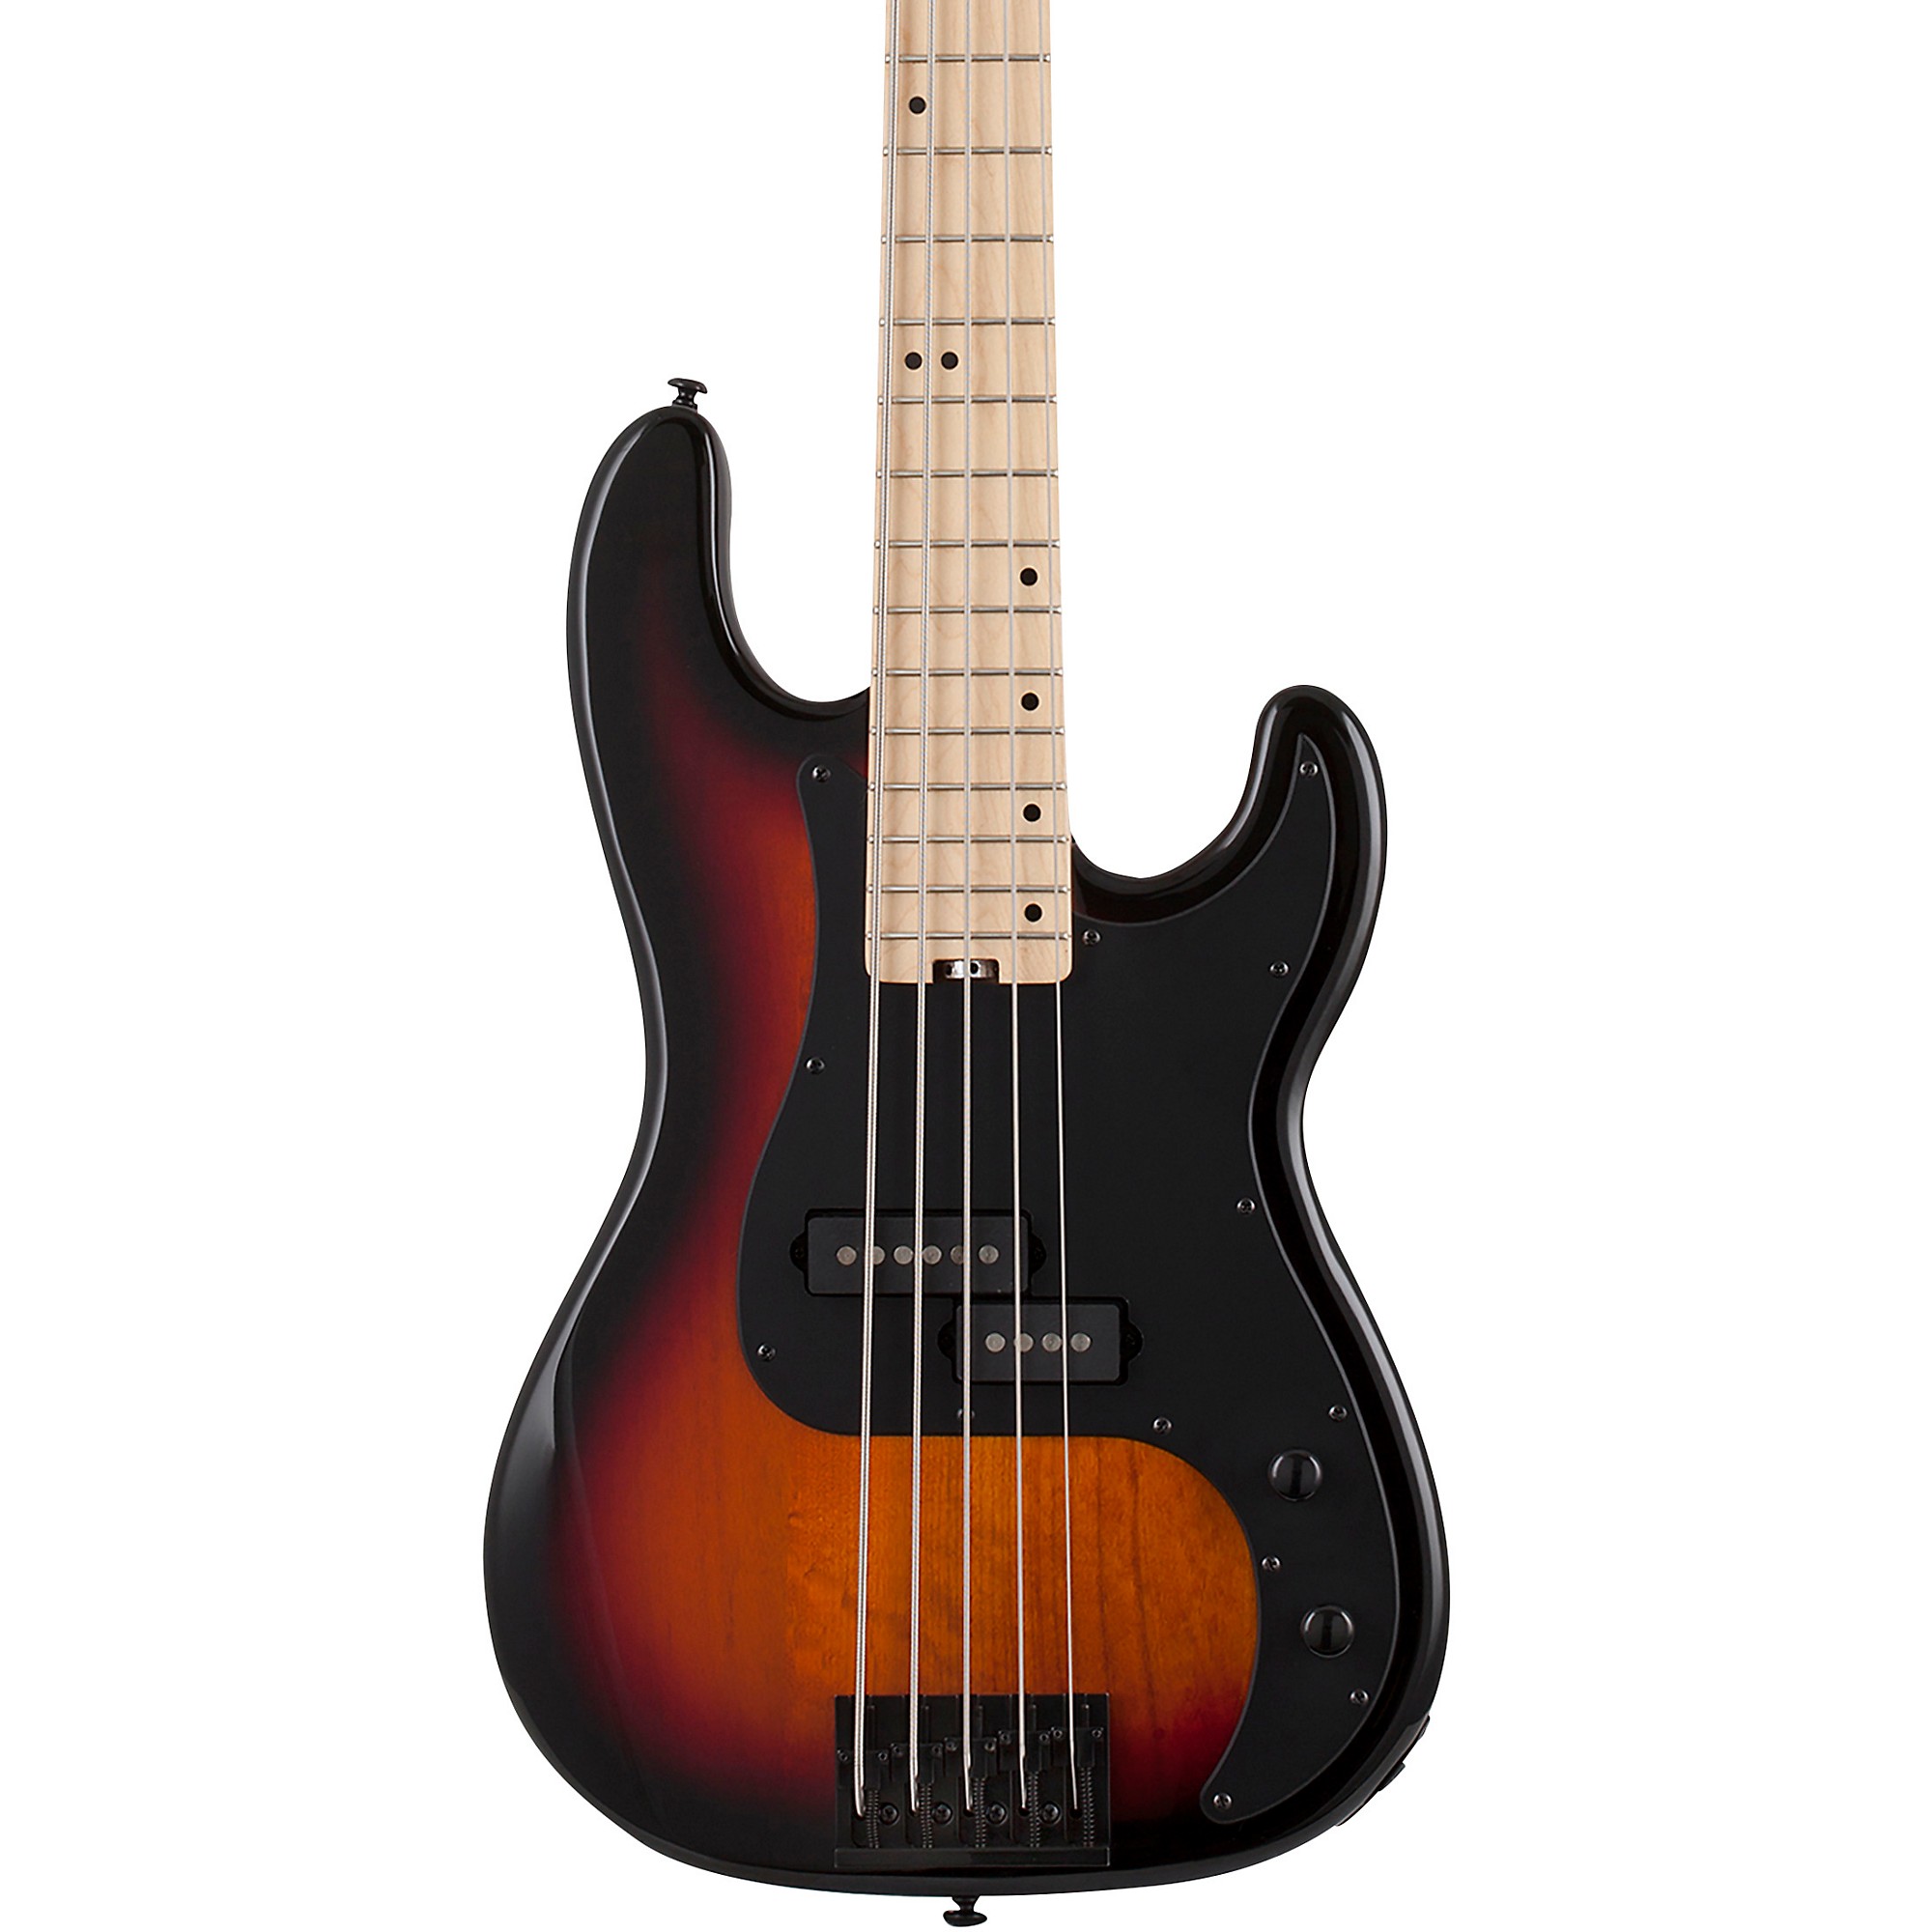 Schecter Guitar Research P-5 Ivy 5-струнная бас-гитара 3-цветная накладка Sunburst Black